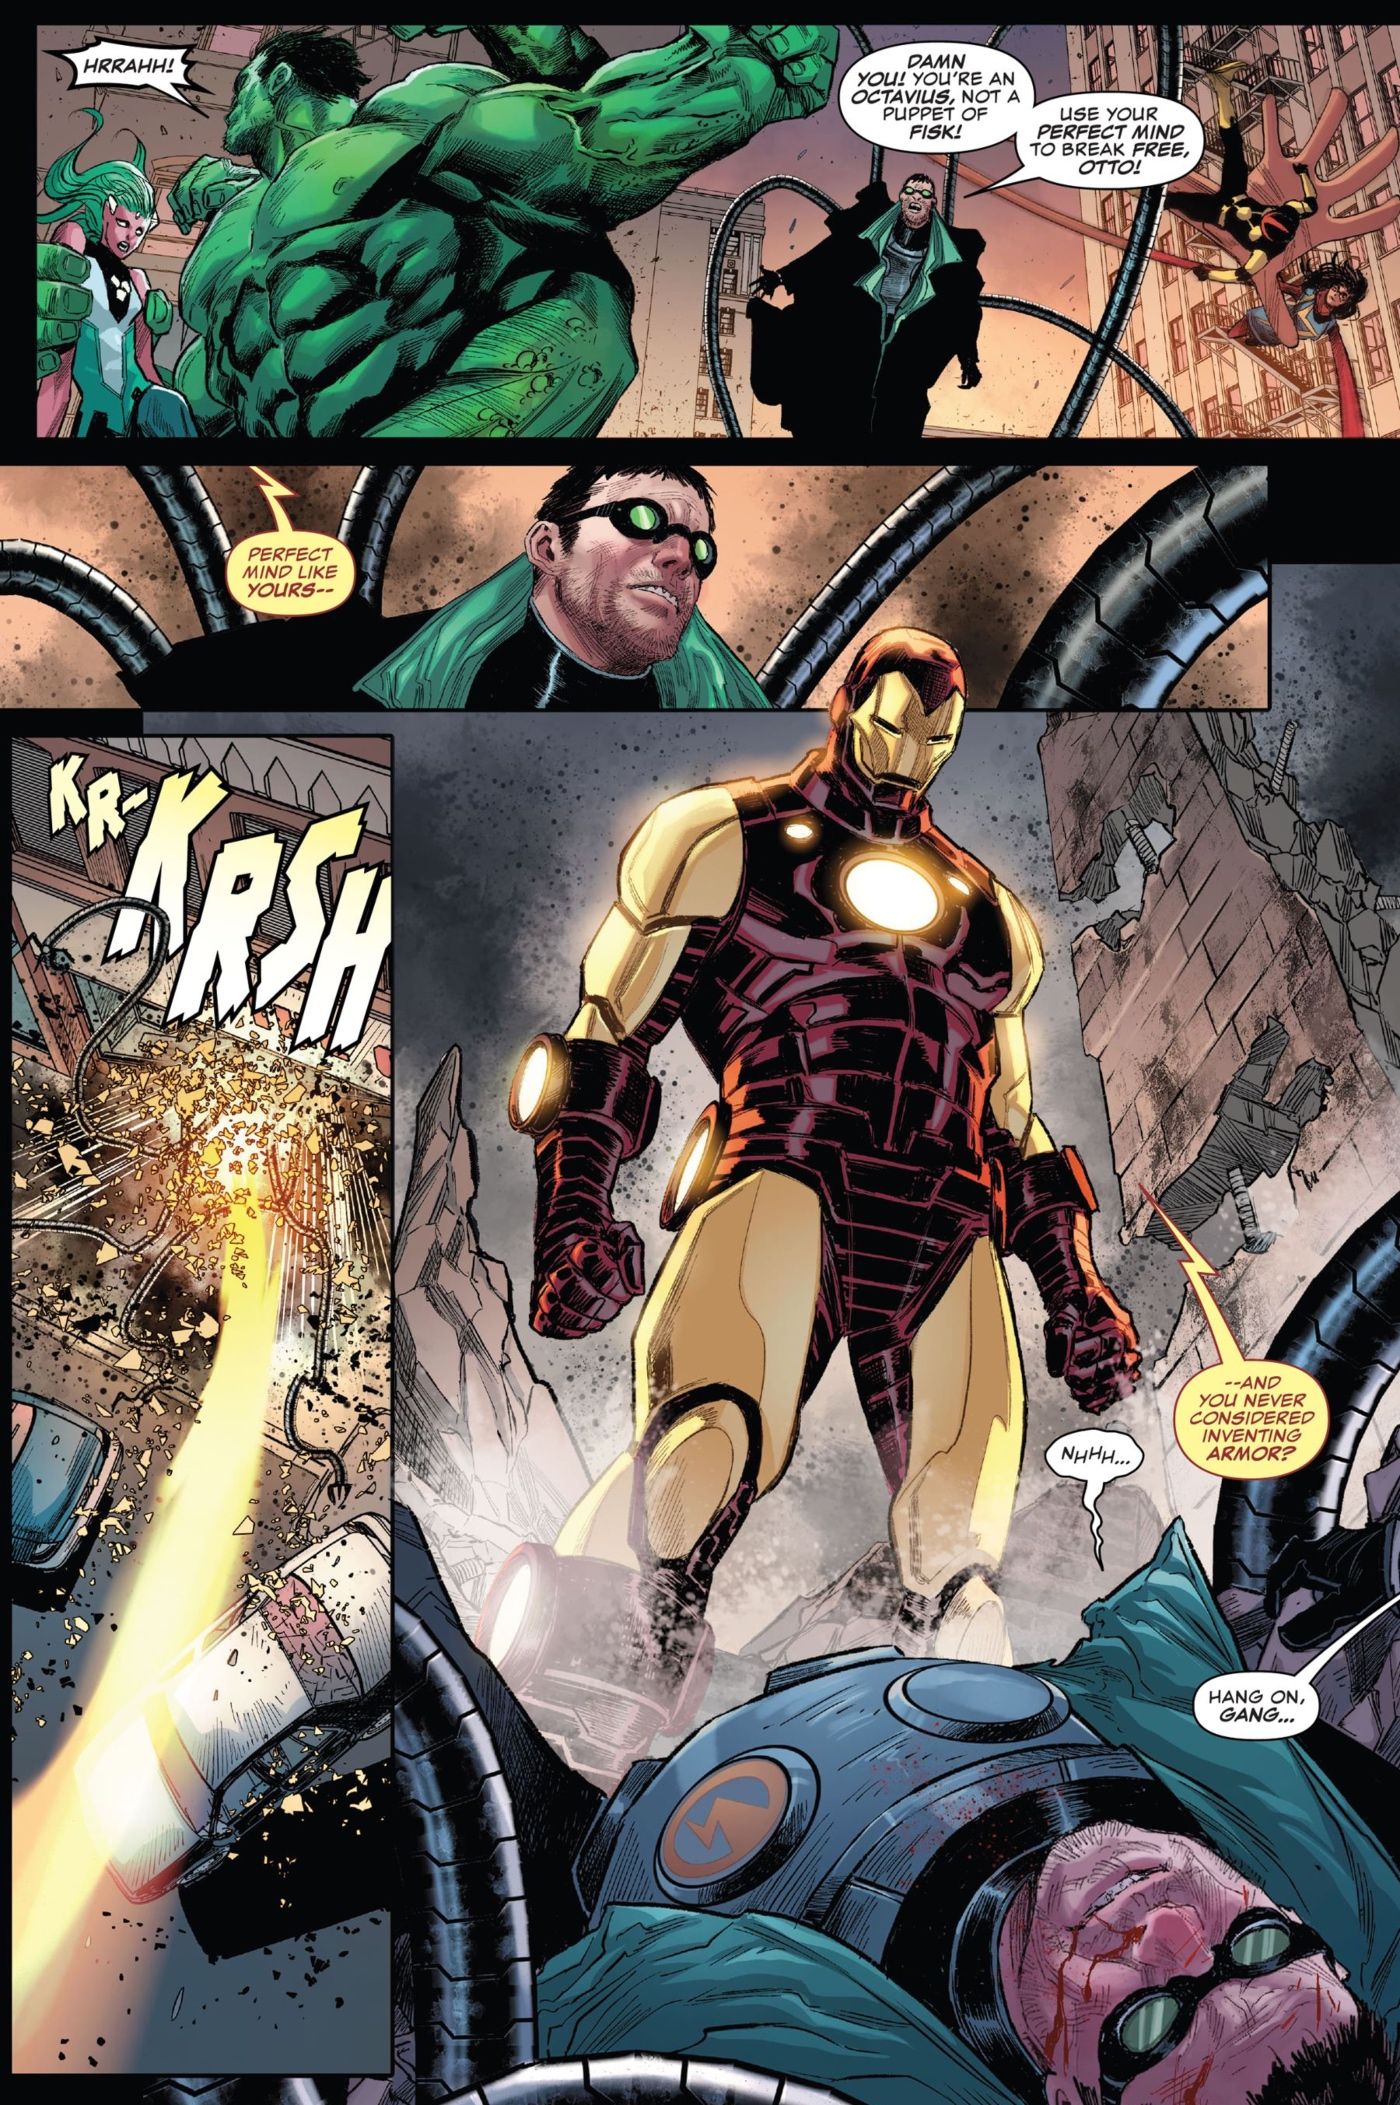 Iron Man redeems himself over Doc Ock. 